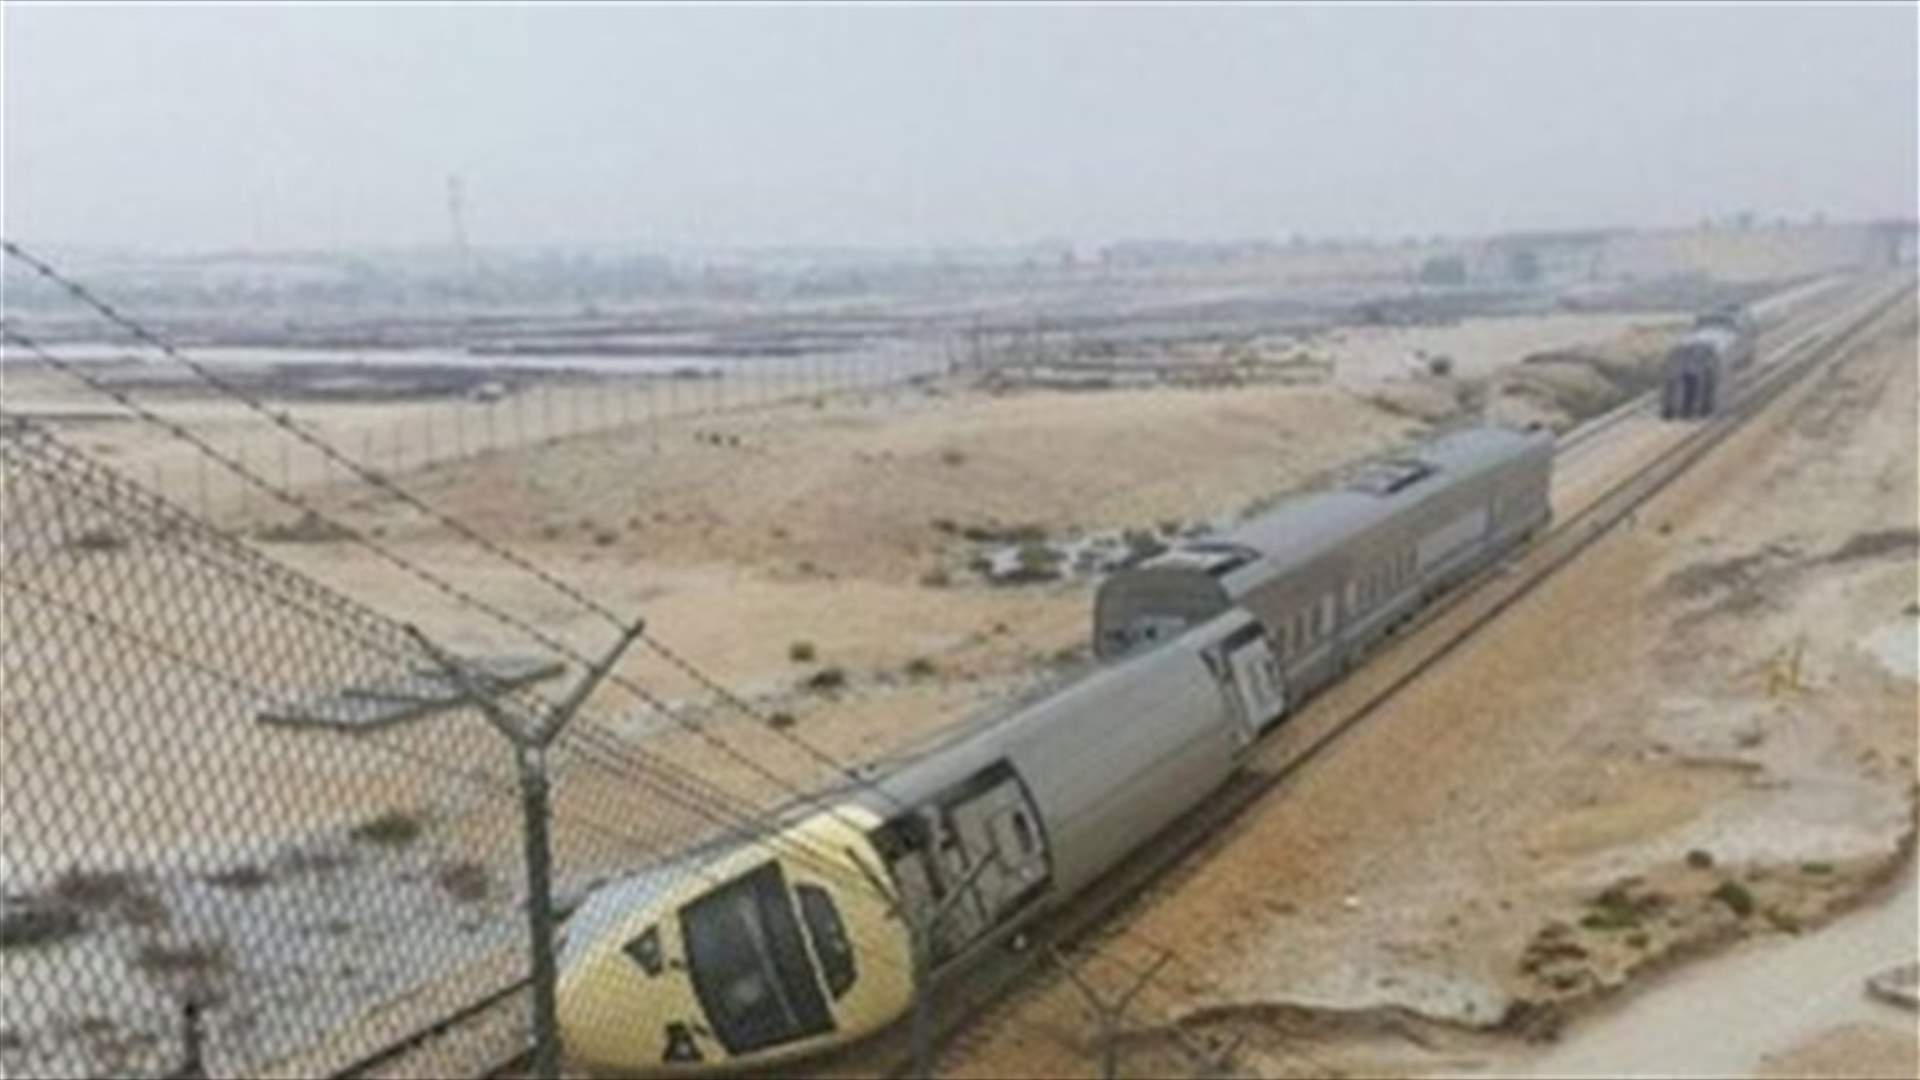 Floods cause train crash near eastern Saudi city, injuring 18